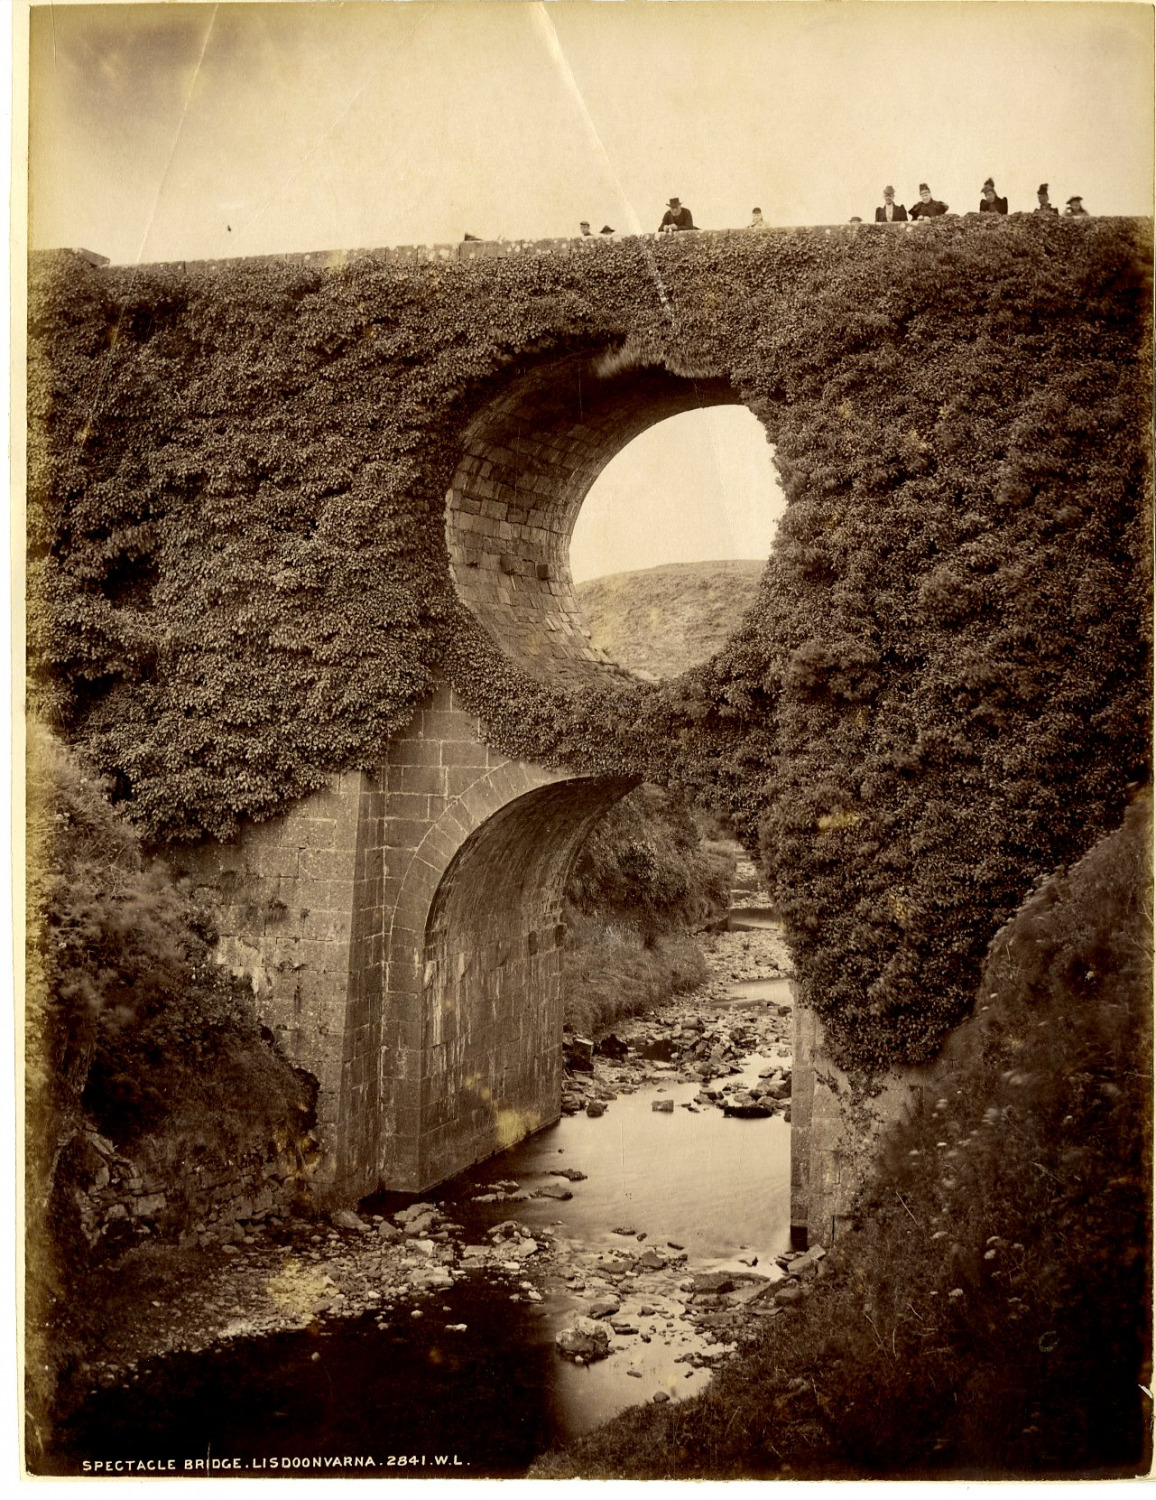 W.L. Ireland, Spectacle Bridge, Lisdoonvarna Vintage Albumen Print.  Draw al